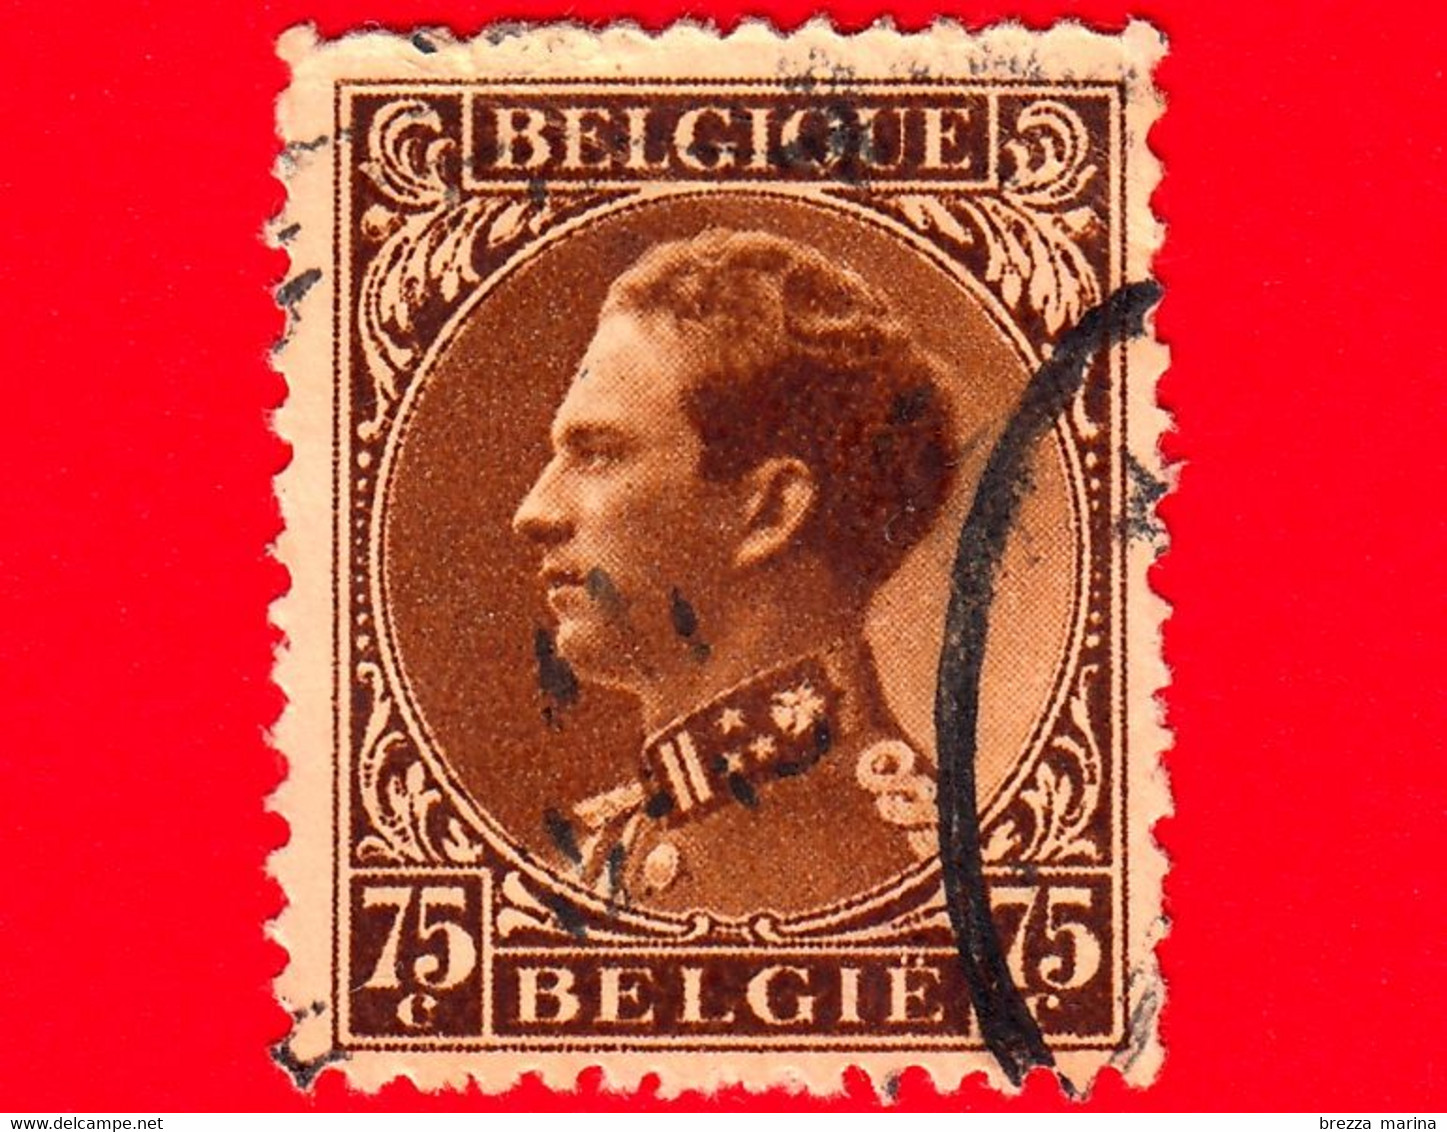 BELGIO - Usato - 1934 - Re Leopoldo III - 75 - 1934-1935 Leopold III